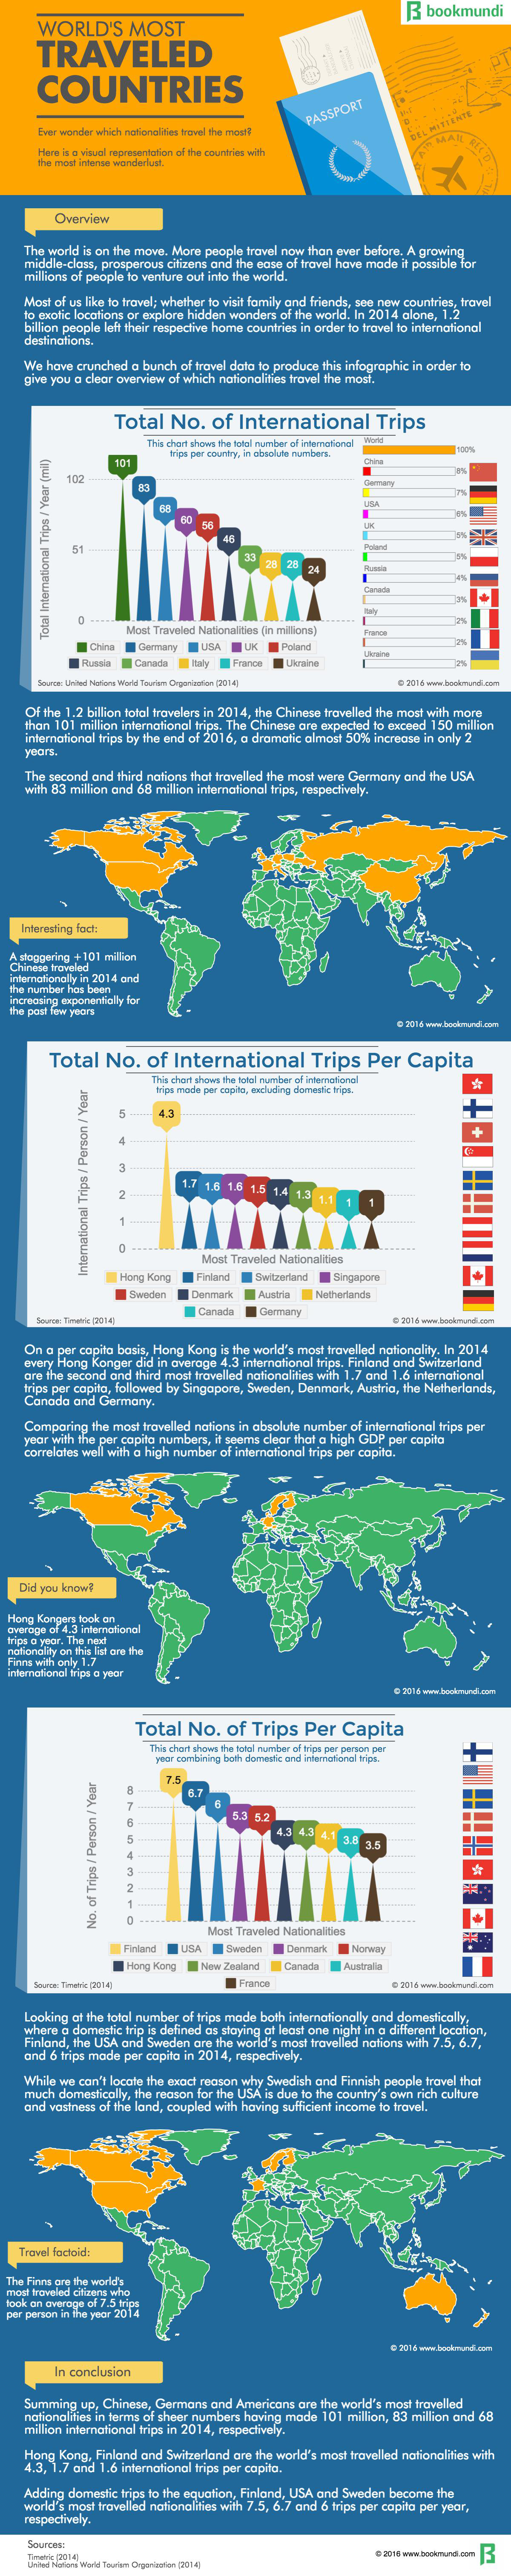 The World’s Most Traveled Countries Infographic - BookMundi